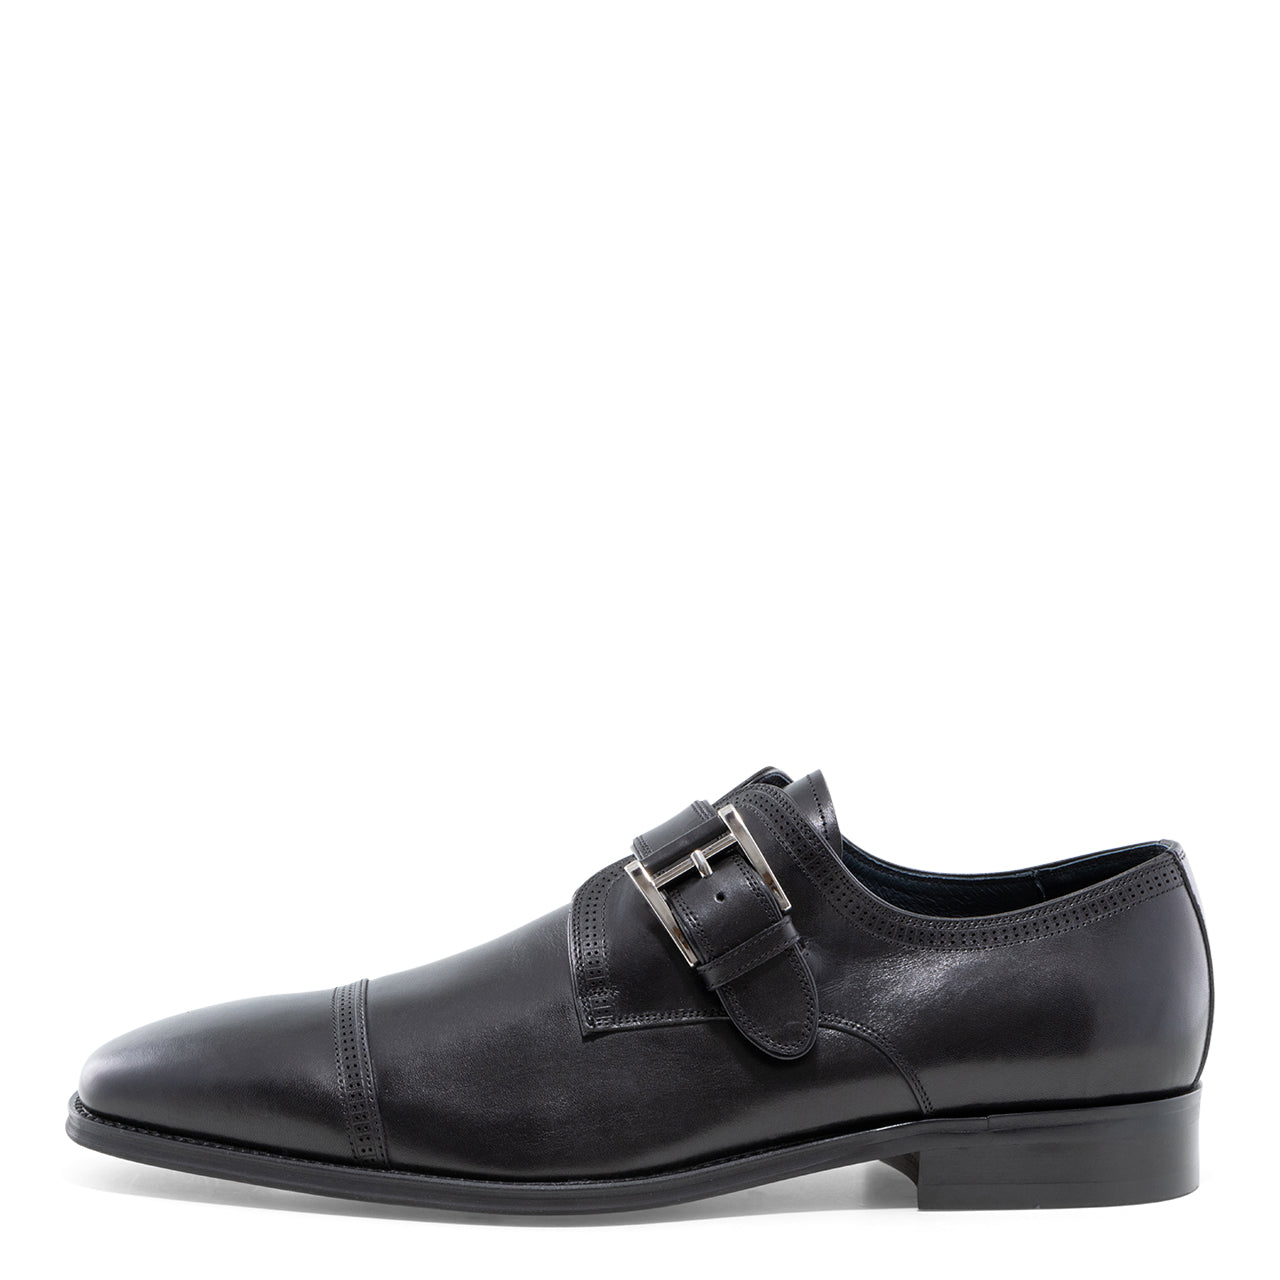 Mcneil - Black Single Monk Strap Oxford Dress Shoes for Men by Jump 2